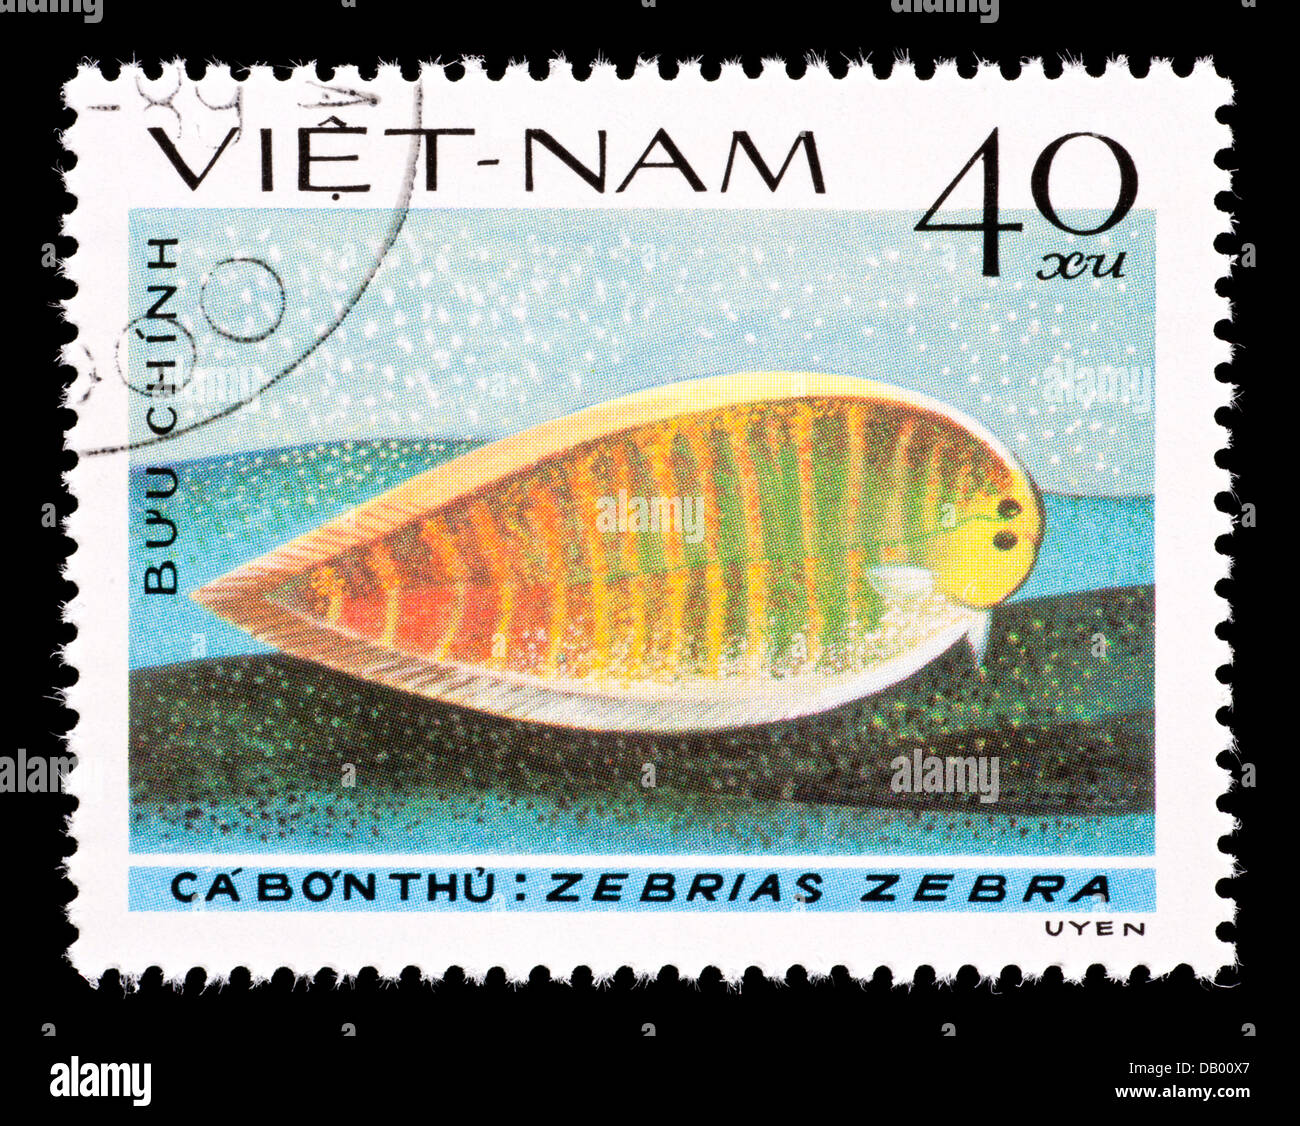 Postage stamp from Vietnam depicting a zebra sole fish (Zebrias zebra) Stock Photo